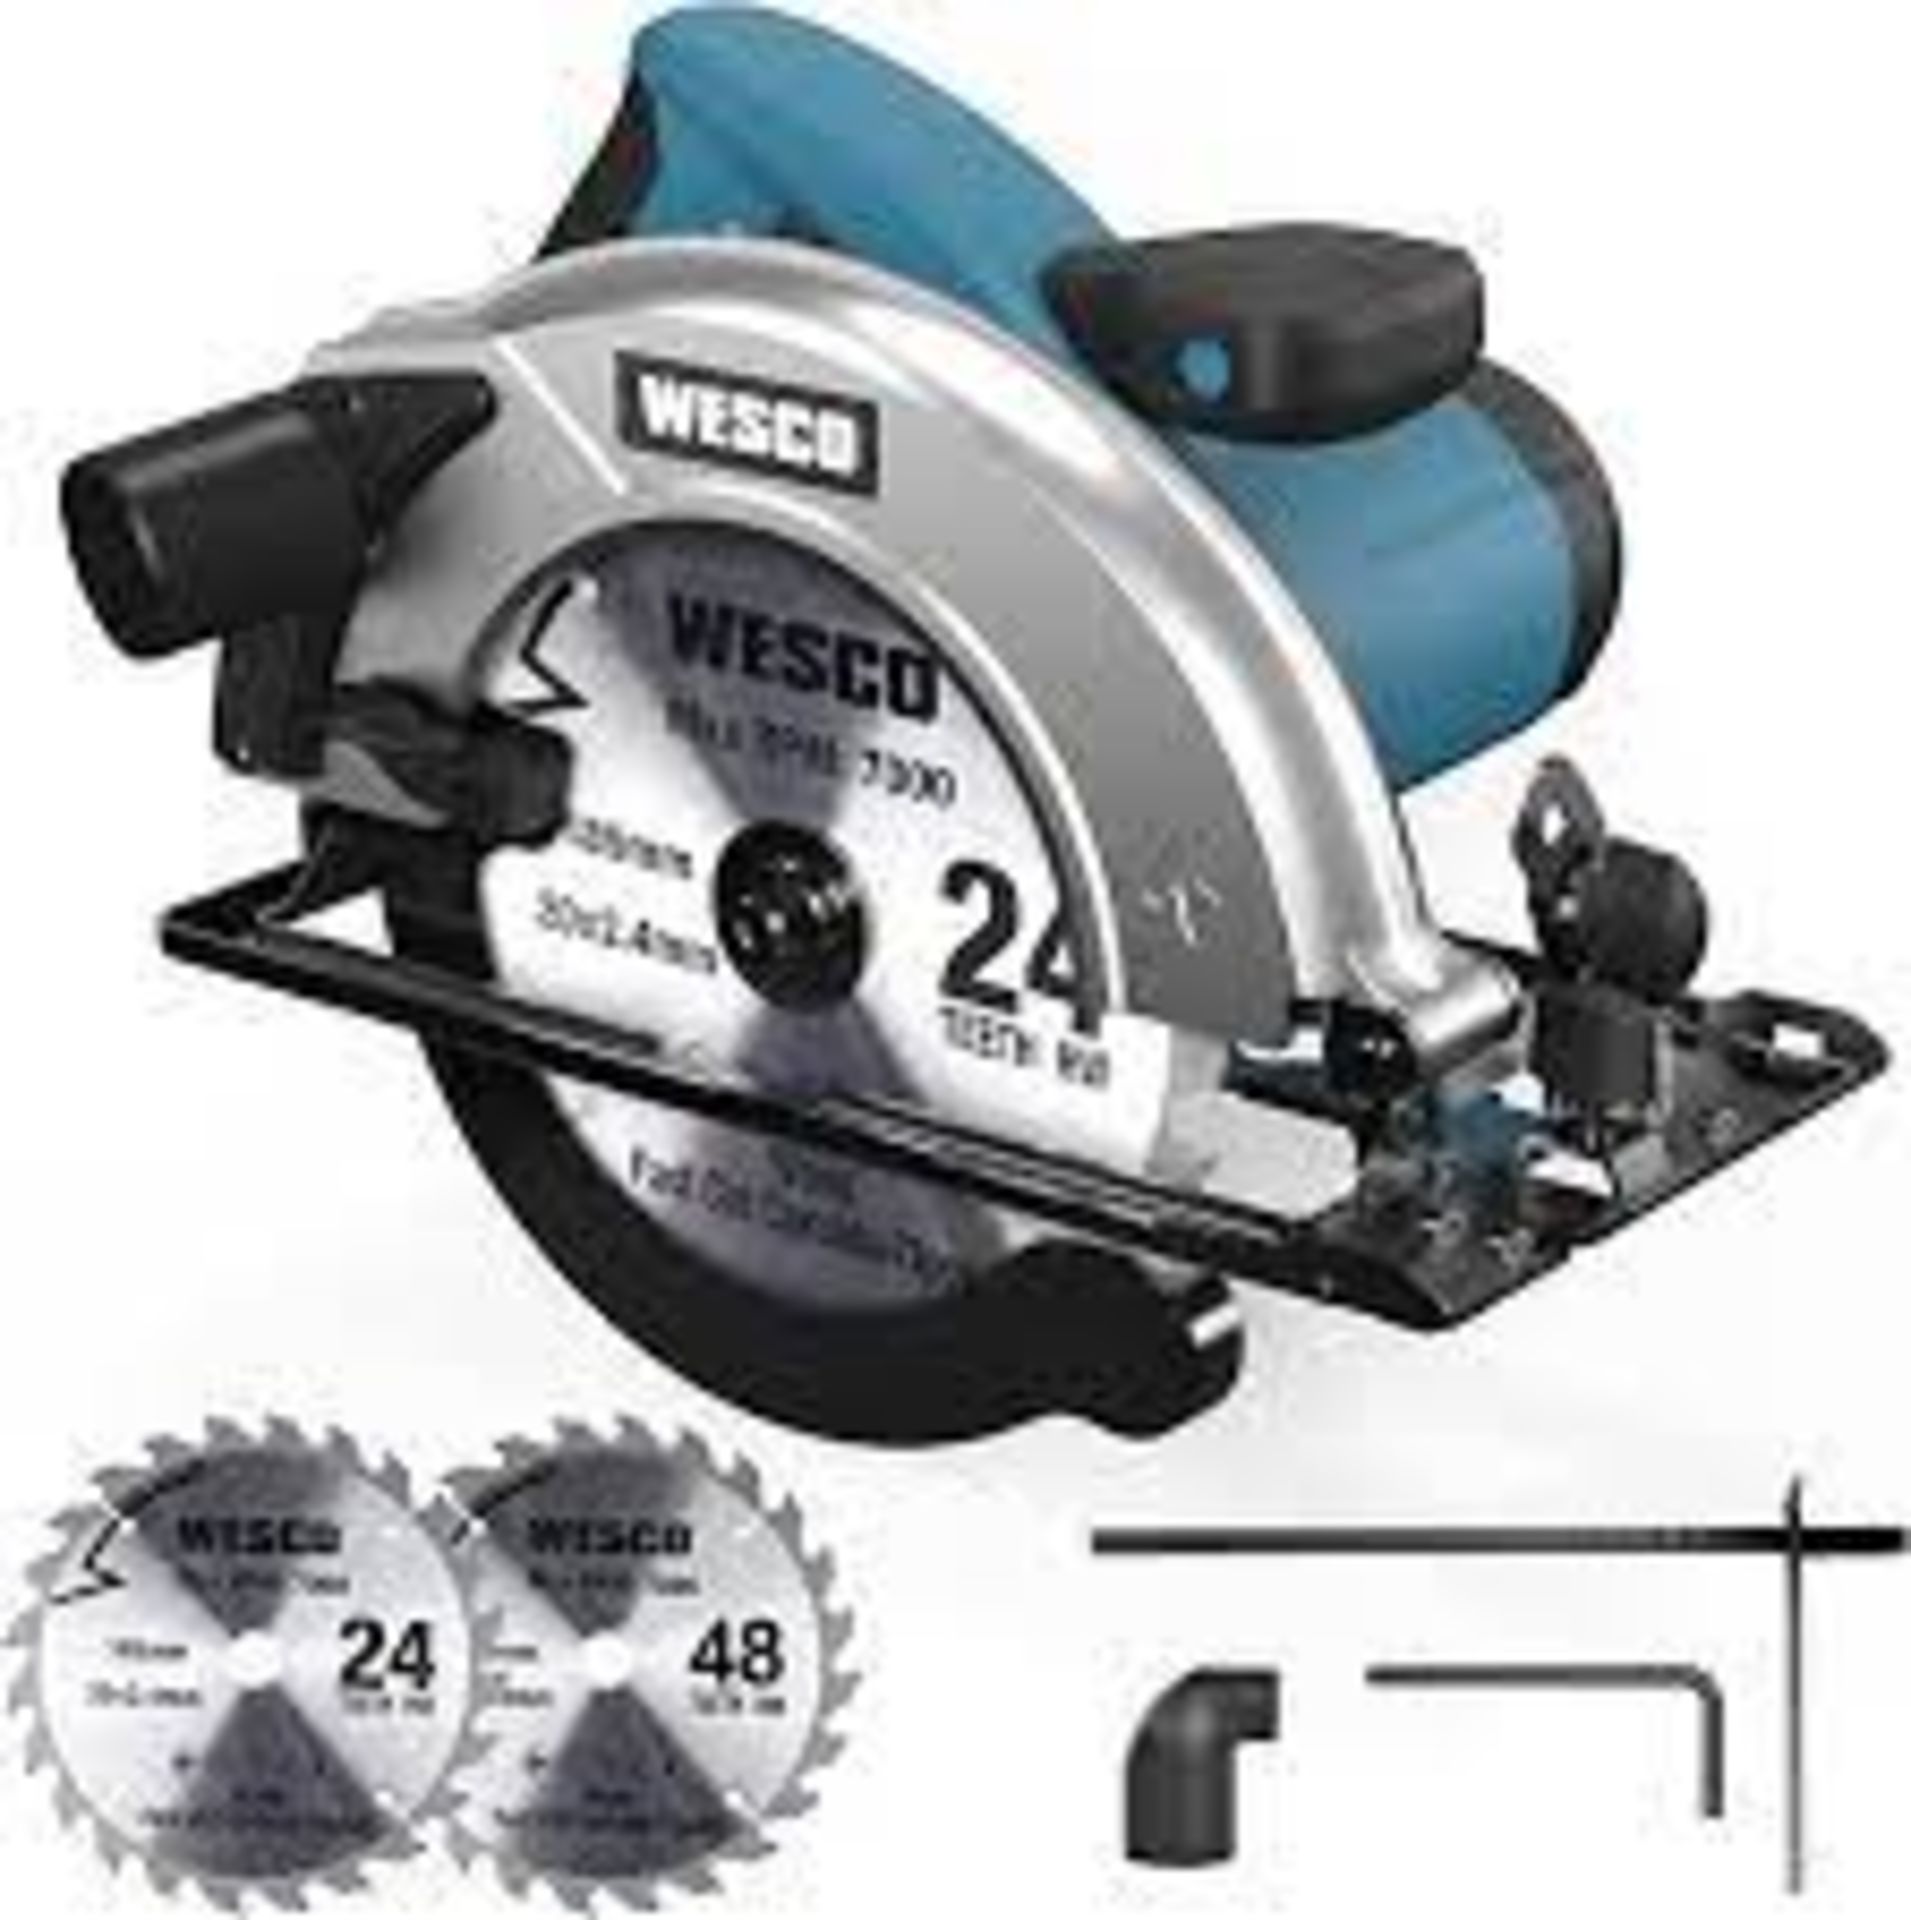 New & Boxed WESCO Circular Saw 1400W 5800 RPM Skill Saw. Cutting Depth: 90°: 65mm-45°: 45mm. with